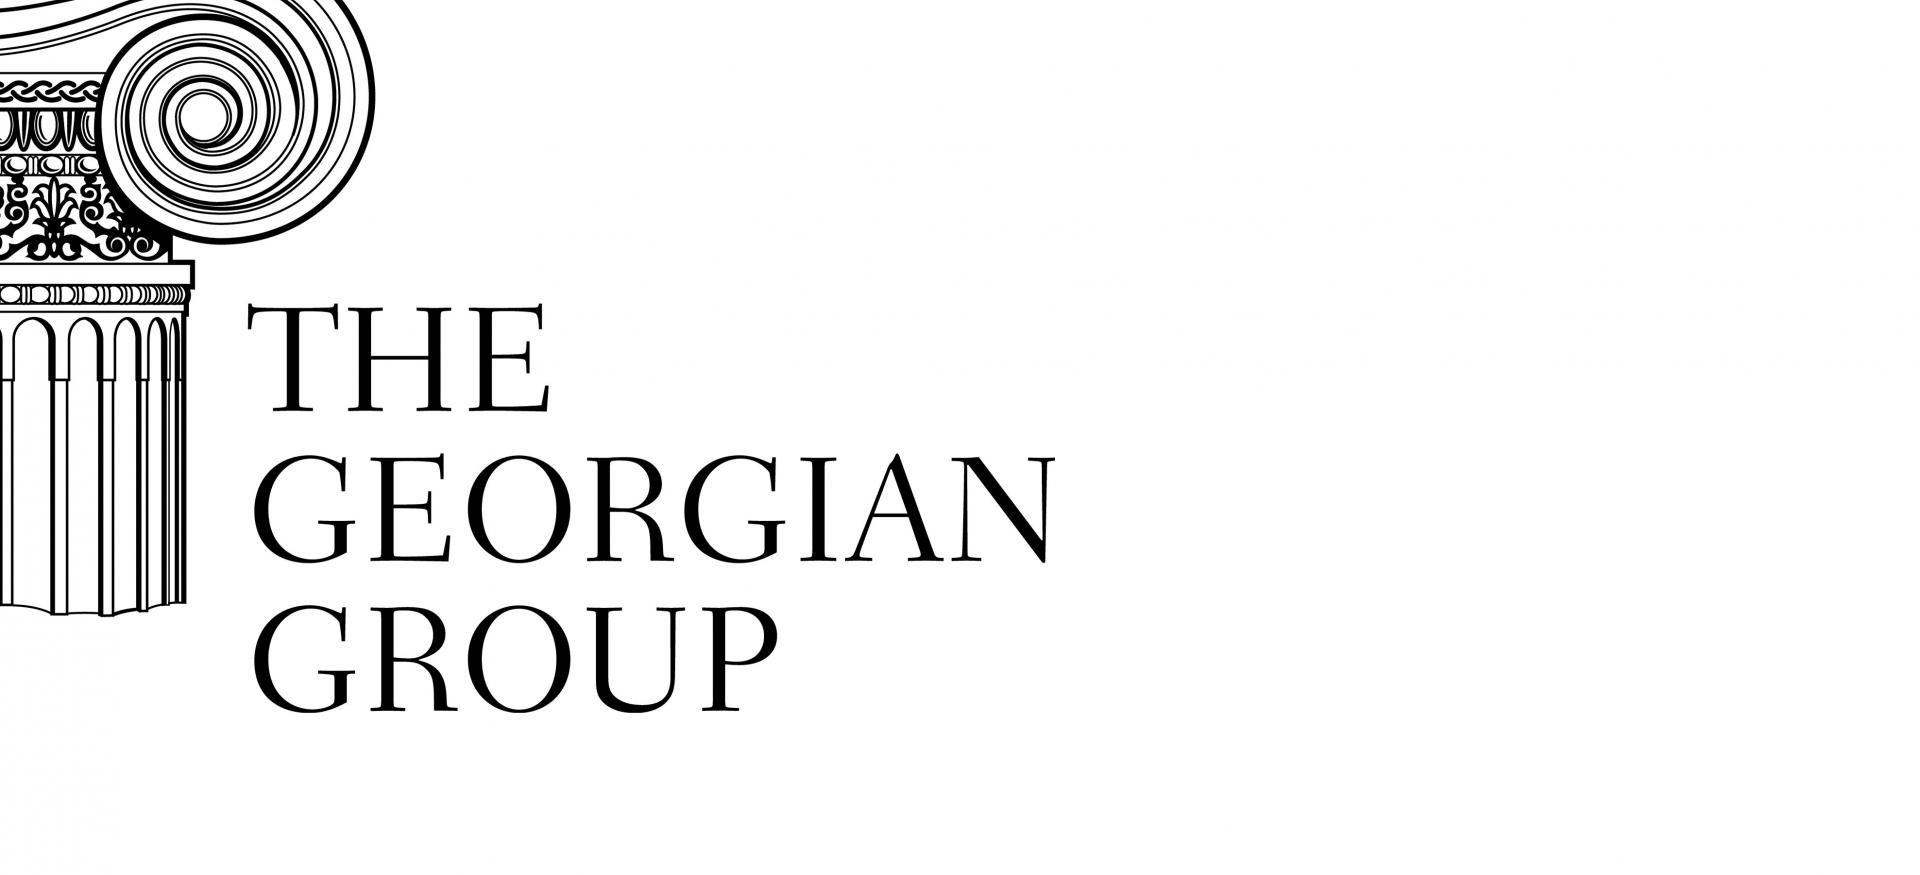 The logo of the Georgian Group.